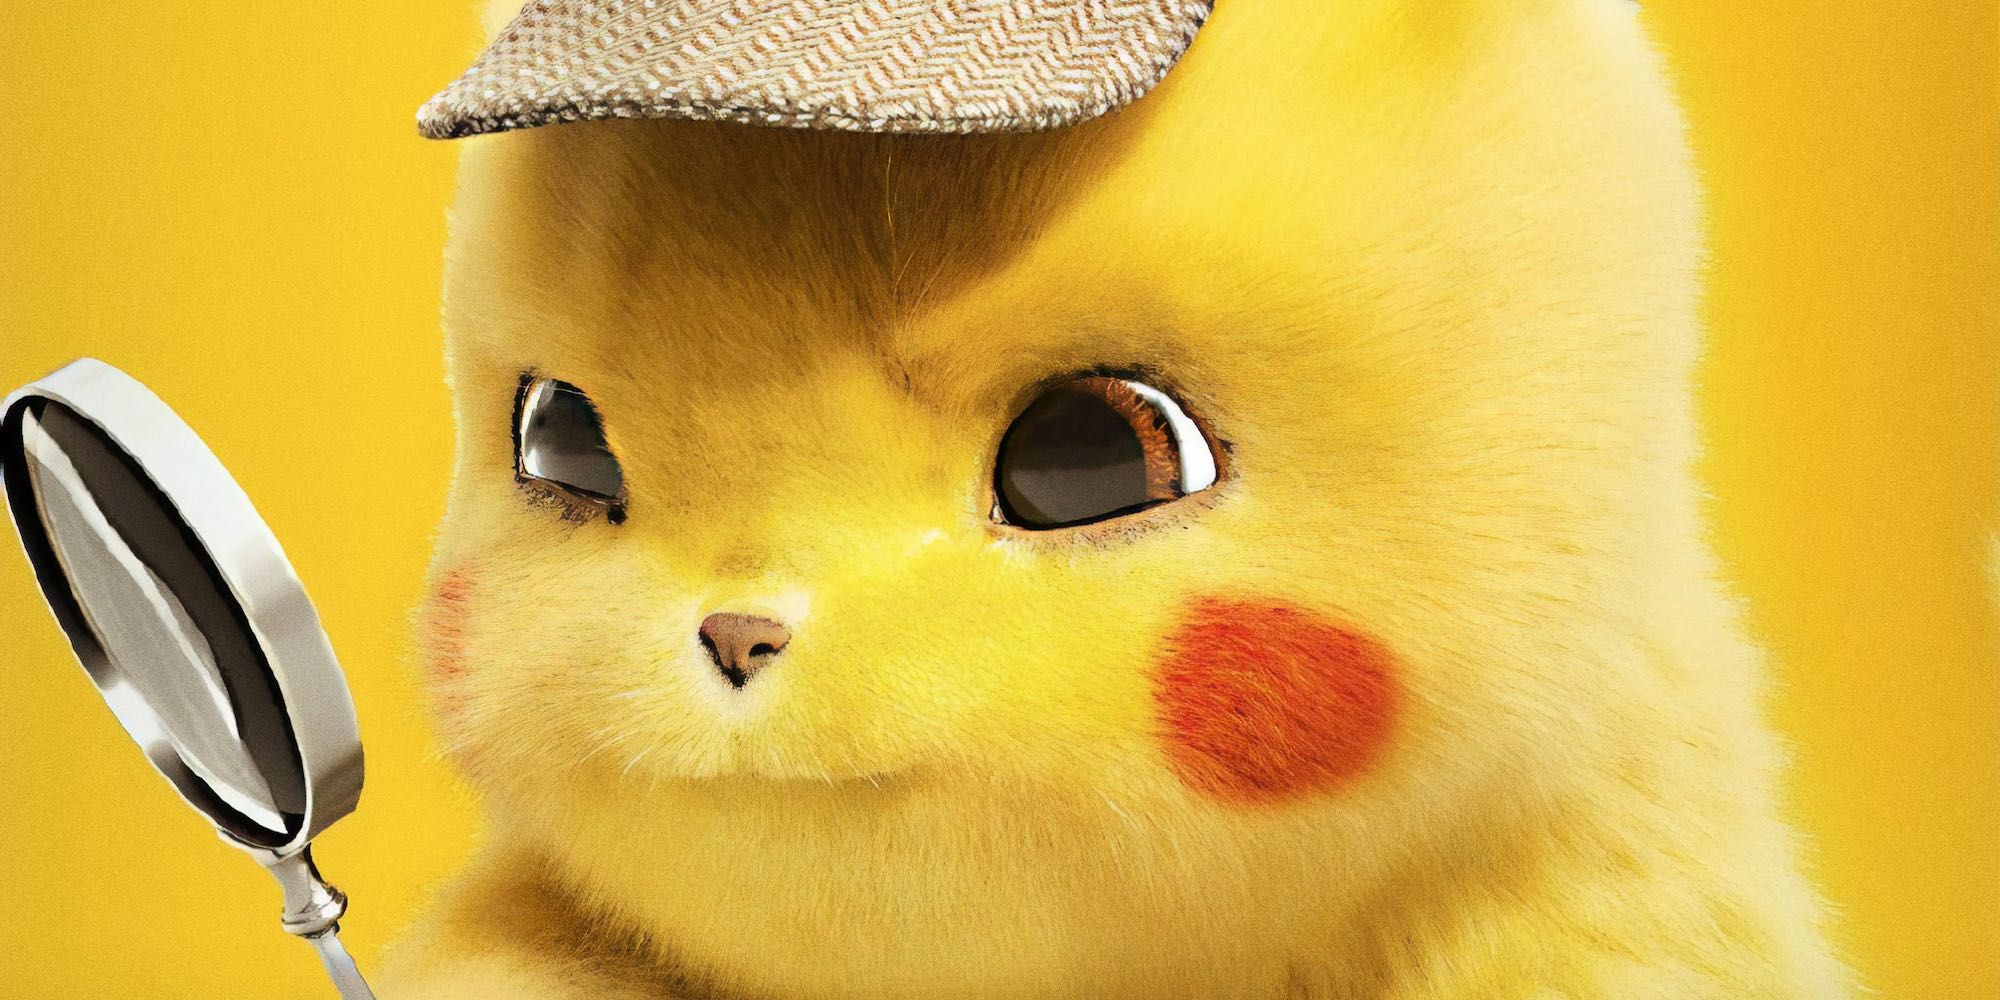 Pokémons Movie Future After Detective Pikachu Explained